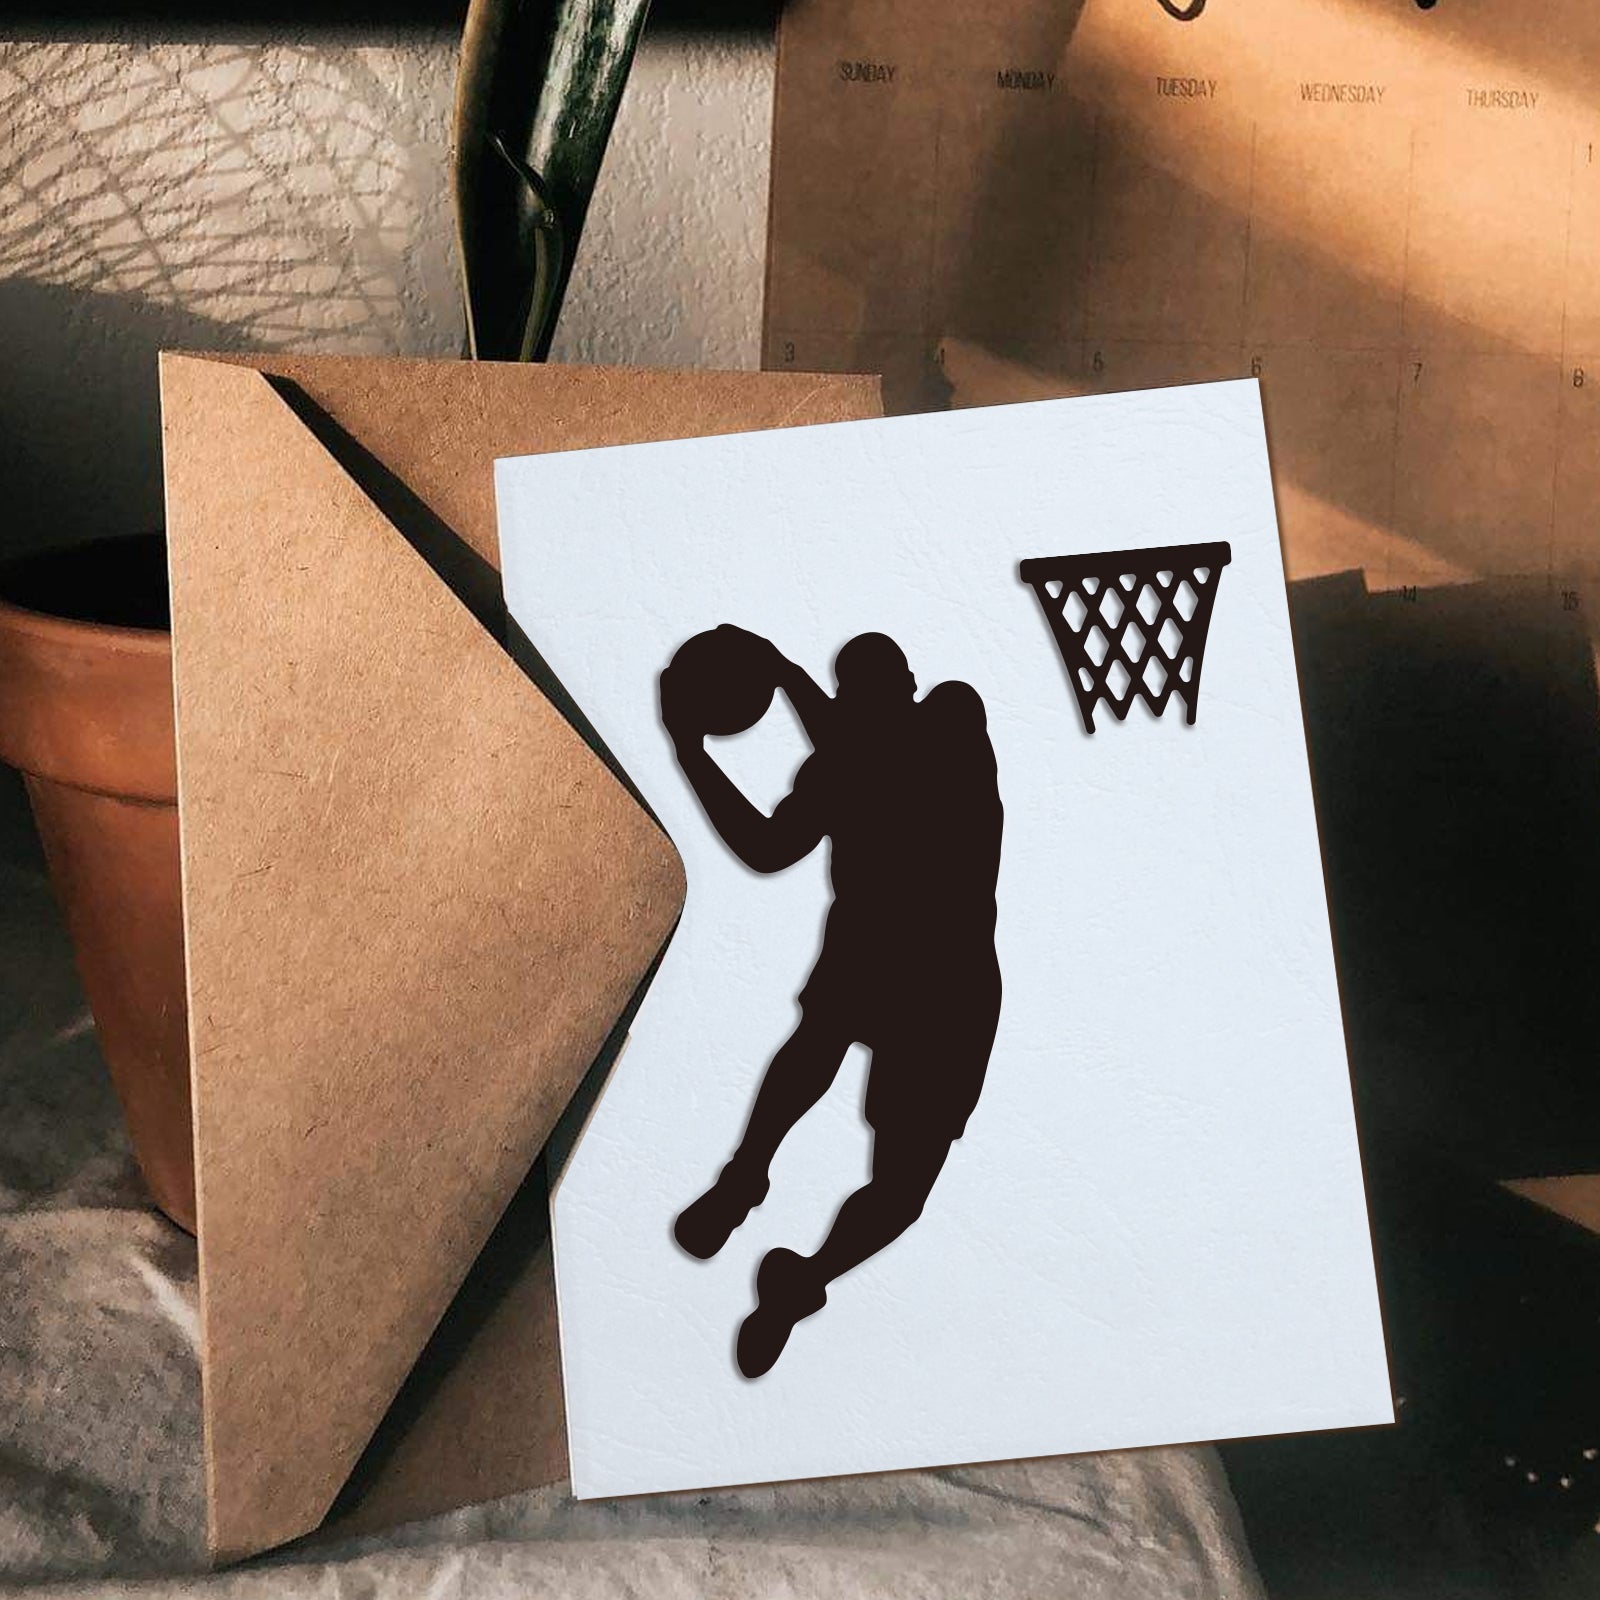 Globleland Basketball Player, Basketball, Hoop, Playing Basketball Carbon Steel Cutting Dies Stencils, for DIY Scrapbooking/Photo Album, Decorative Embossing DIY Paper Card